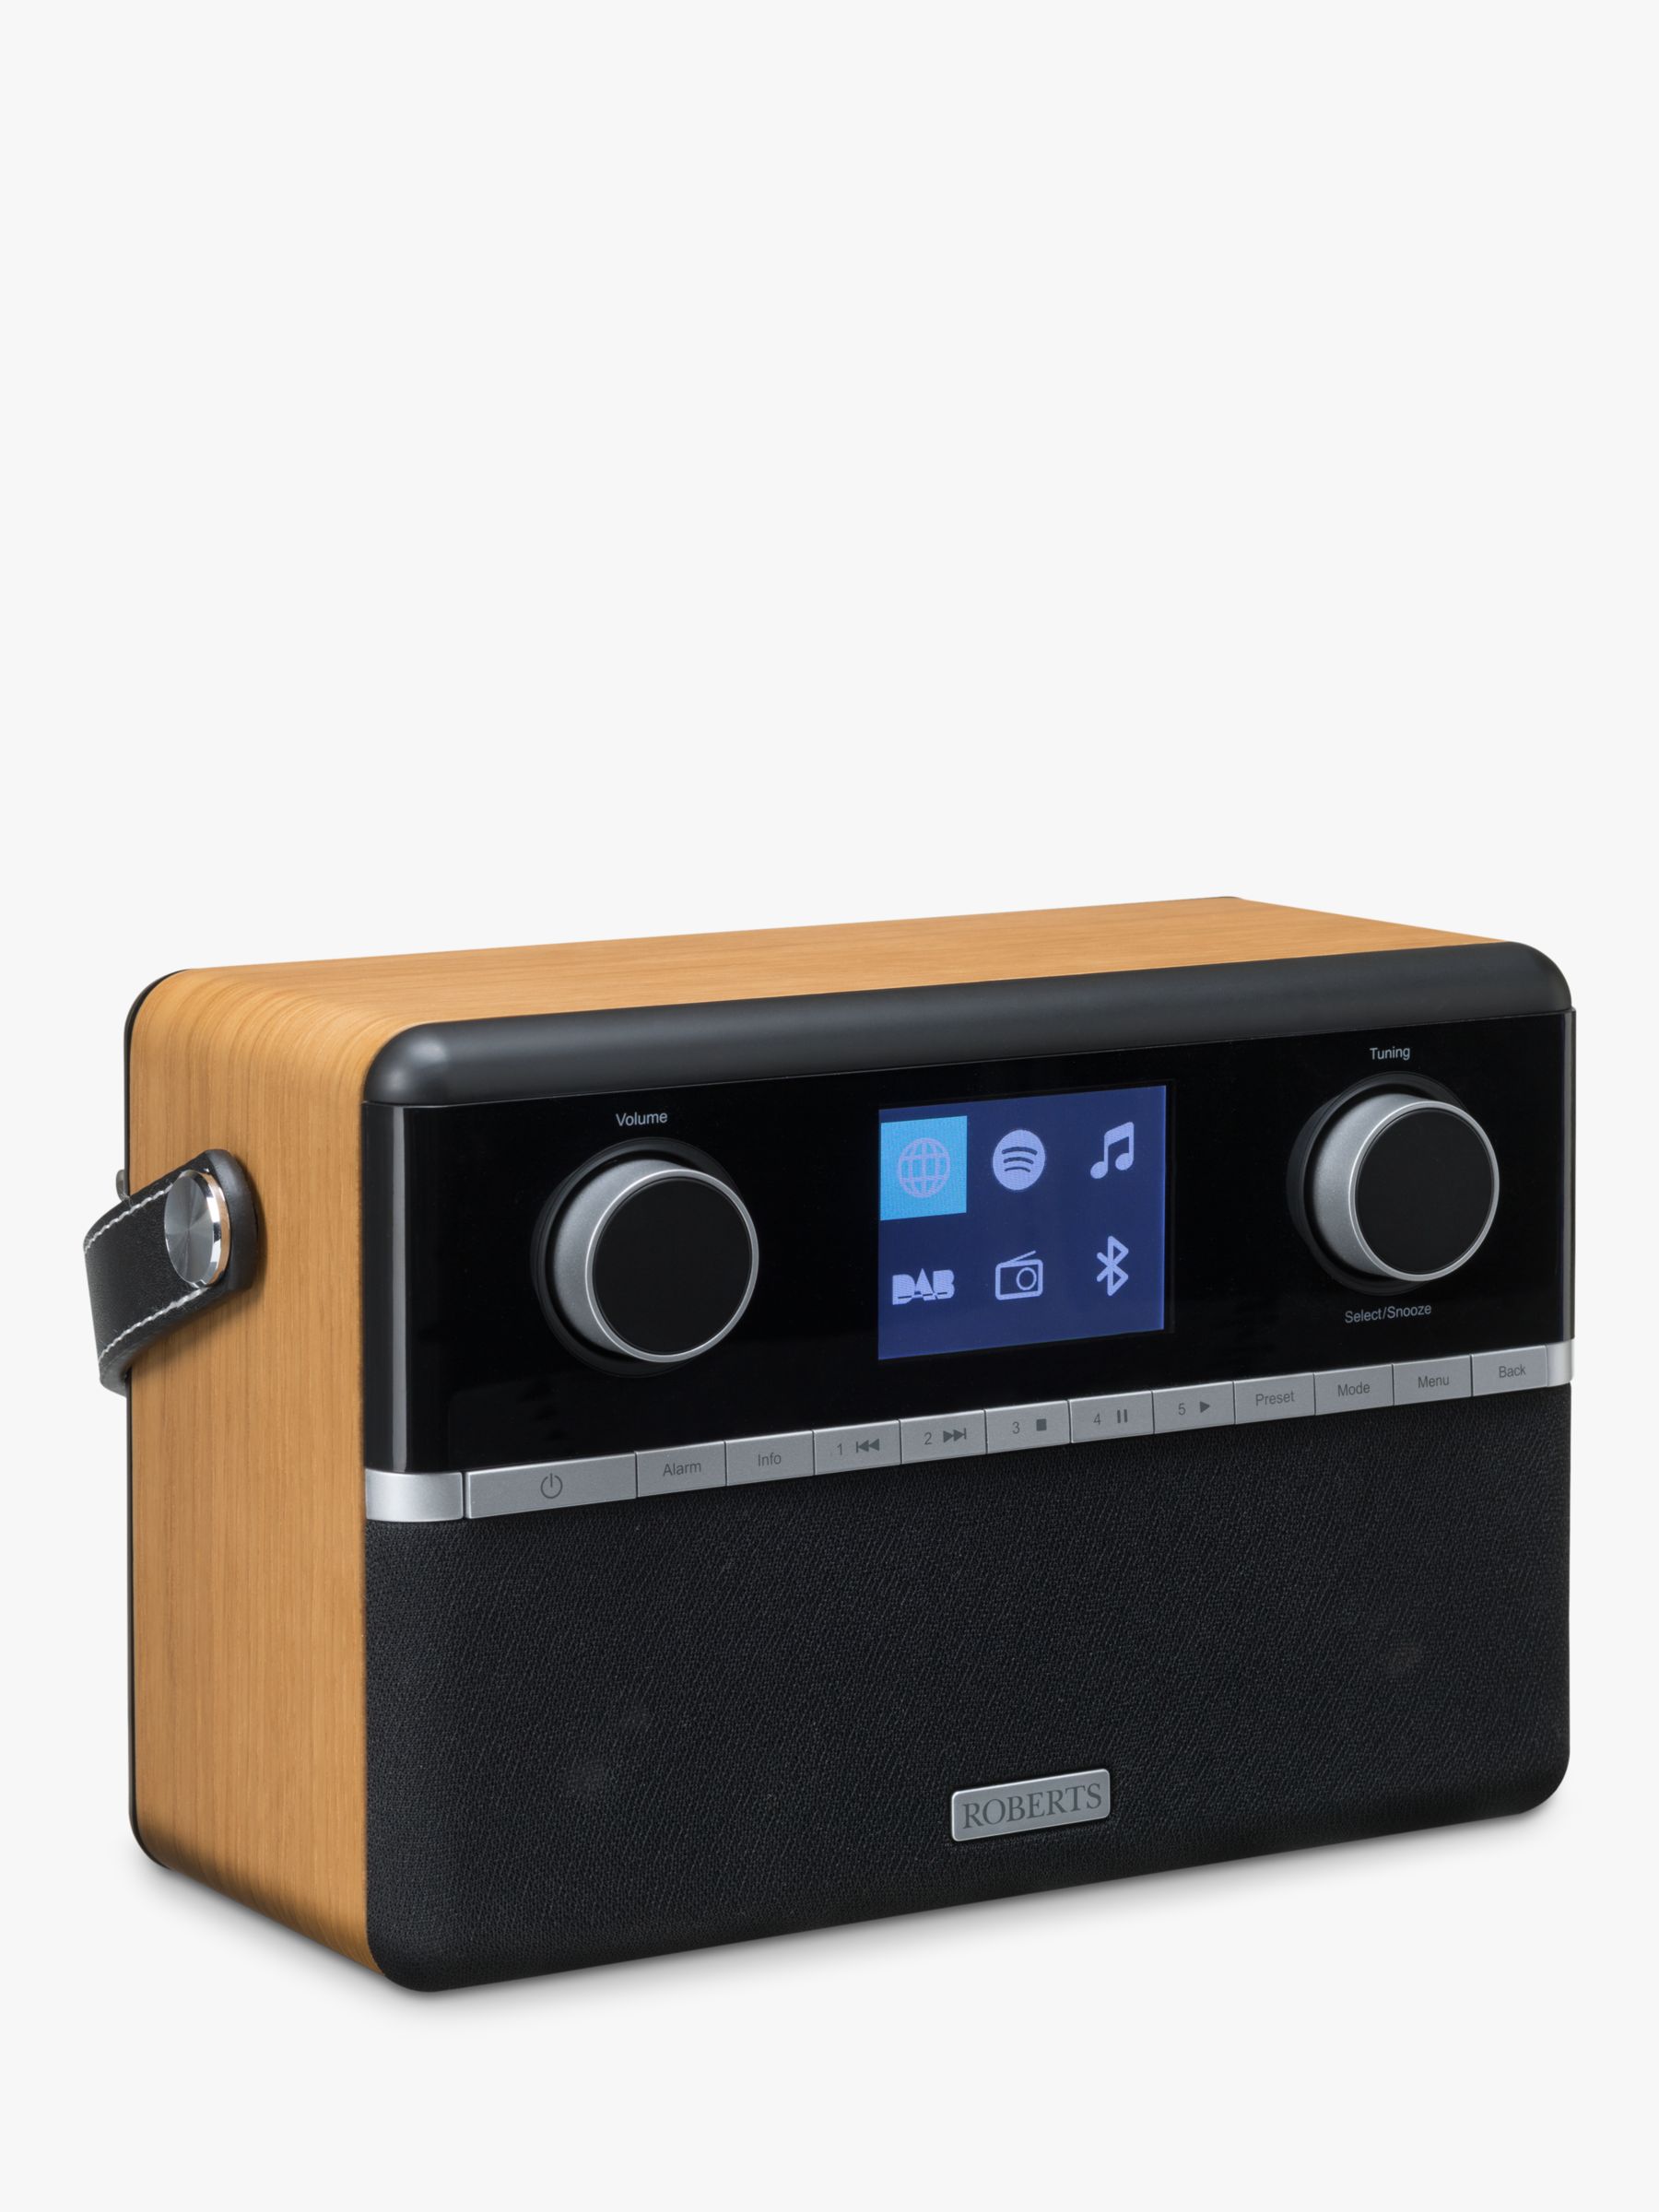 ROBERTS Stream 94i DAB+/FM/Internet Smart Radio with Bluetooth, Black/Wood